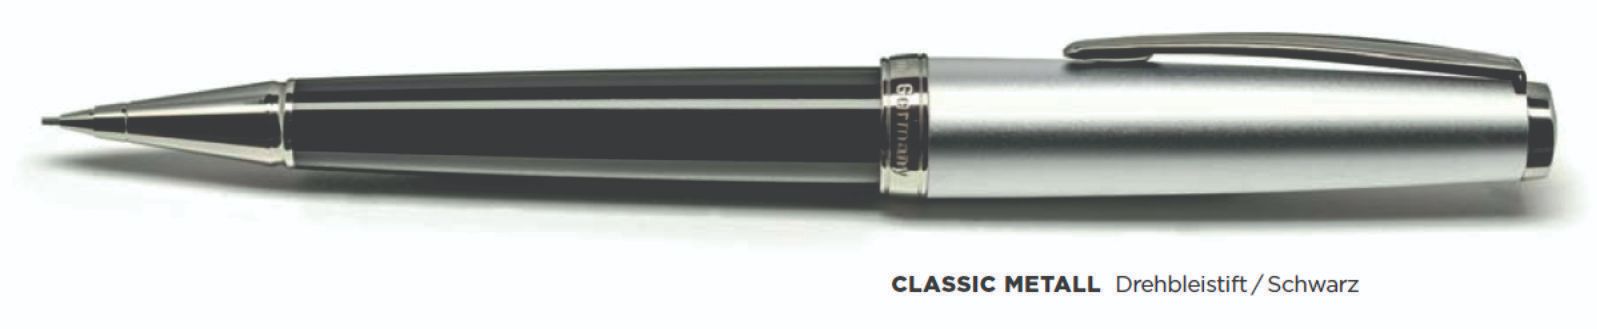 Cleo Pens CLASSIC Metal Drehbleistift Schwarz Lead pencil